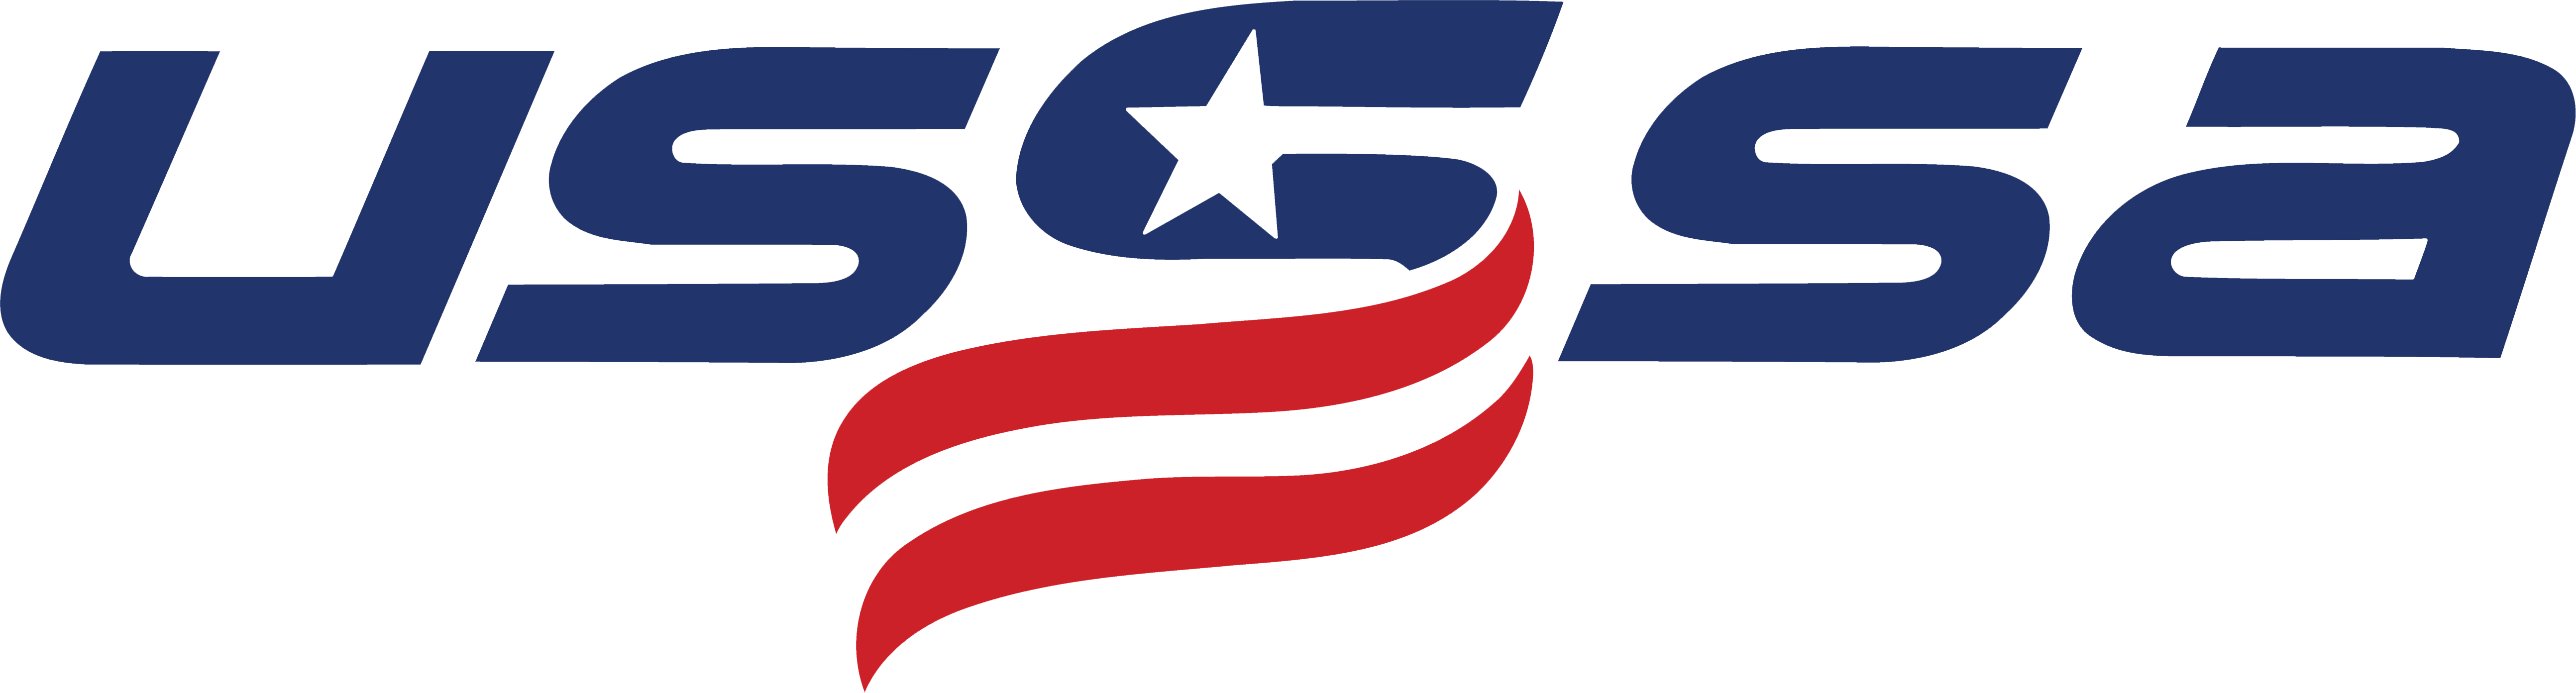 USSSA - The world's largest amateur multi-sport organization